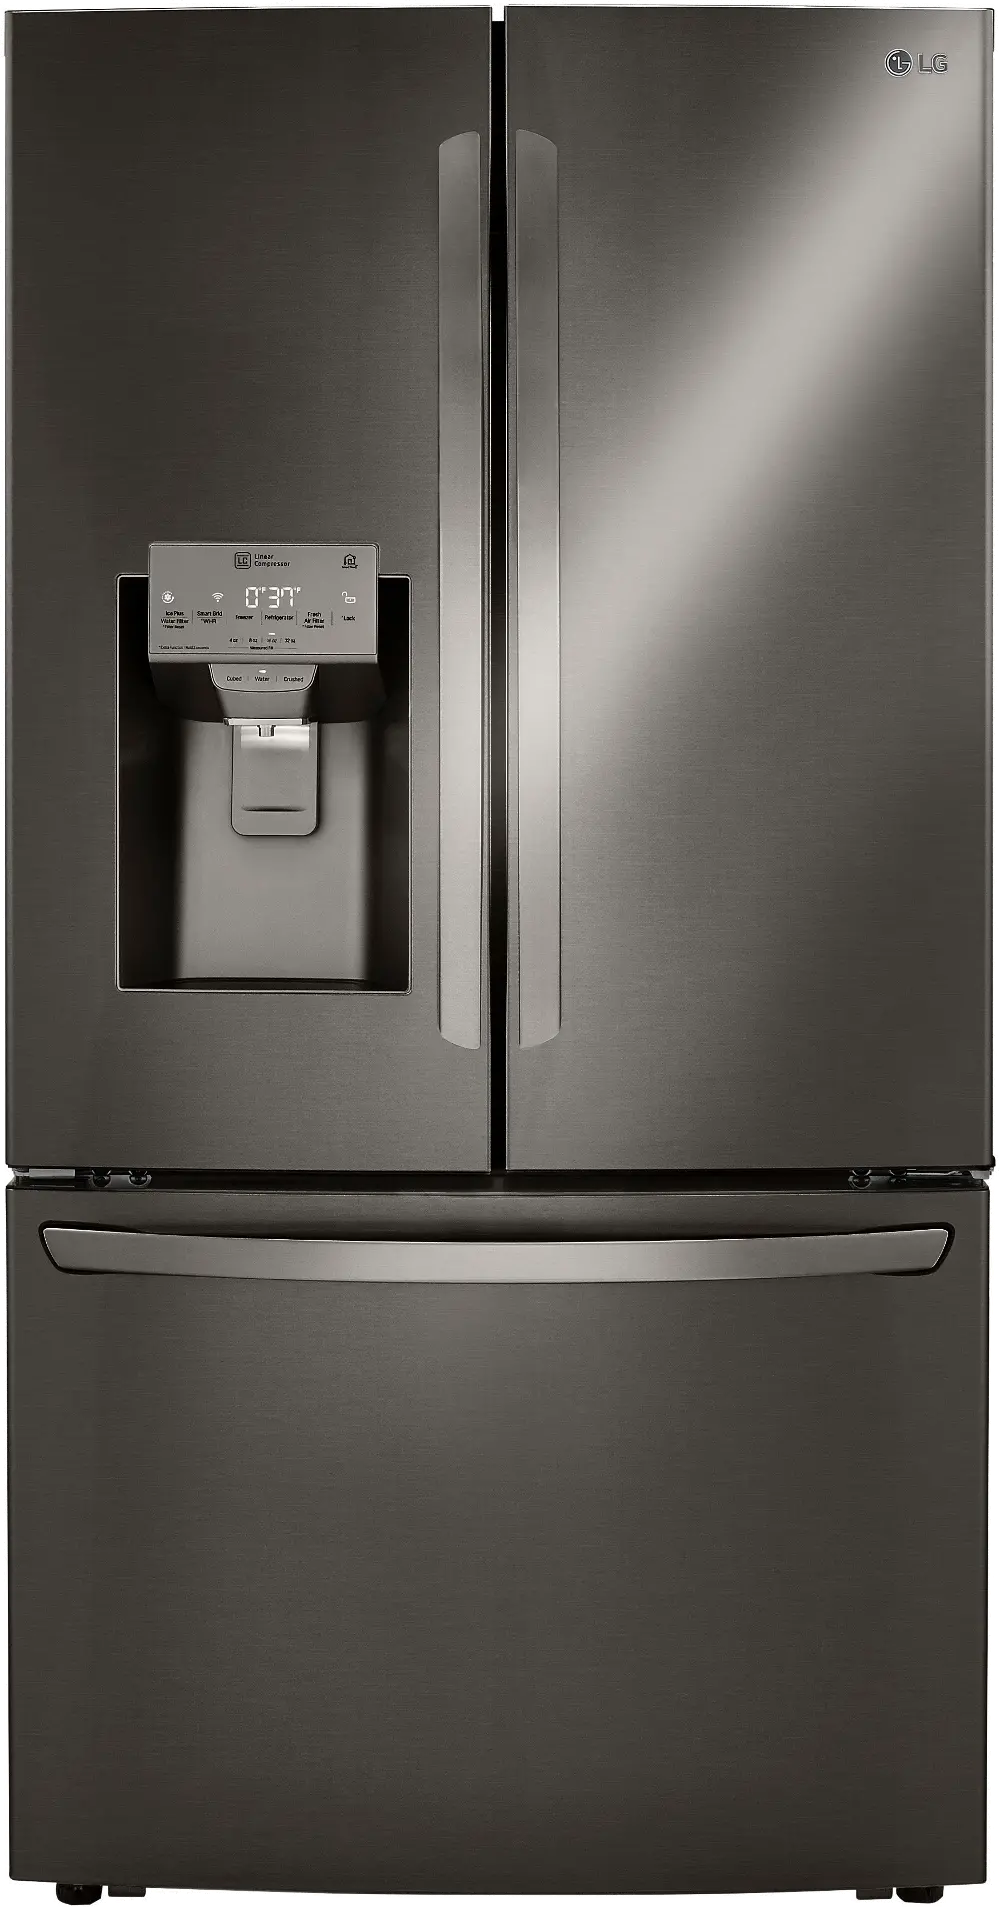 LRFXC2416D LG 23.5 cu ft French Door Refrigerator - Counter Depth Black Stainless Steel-1